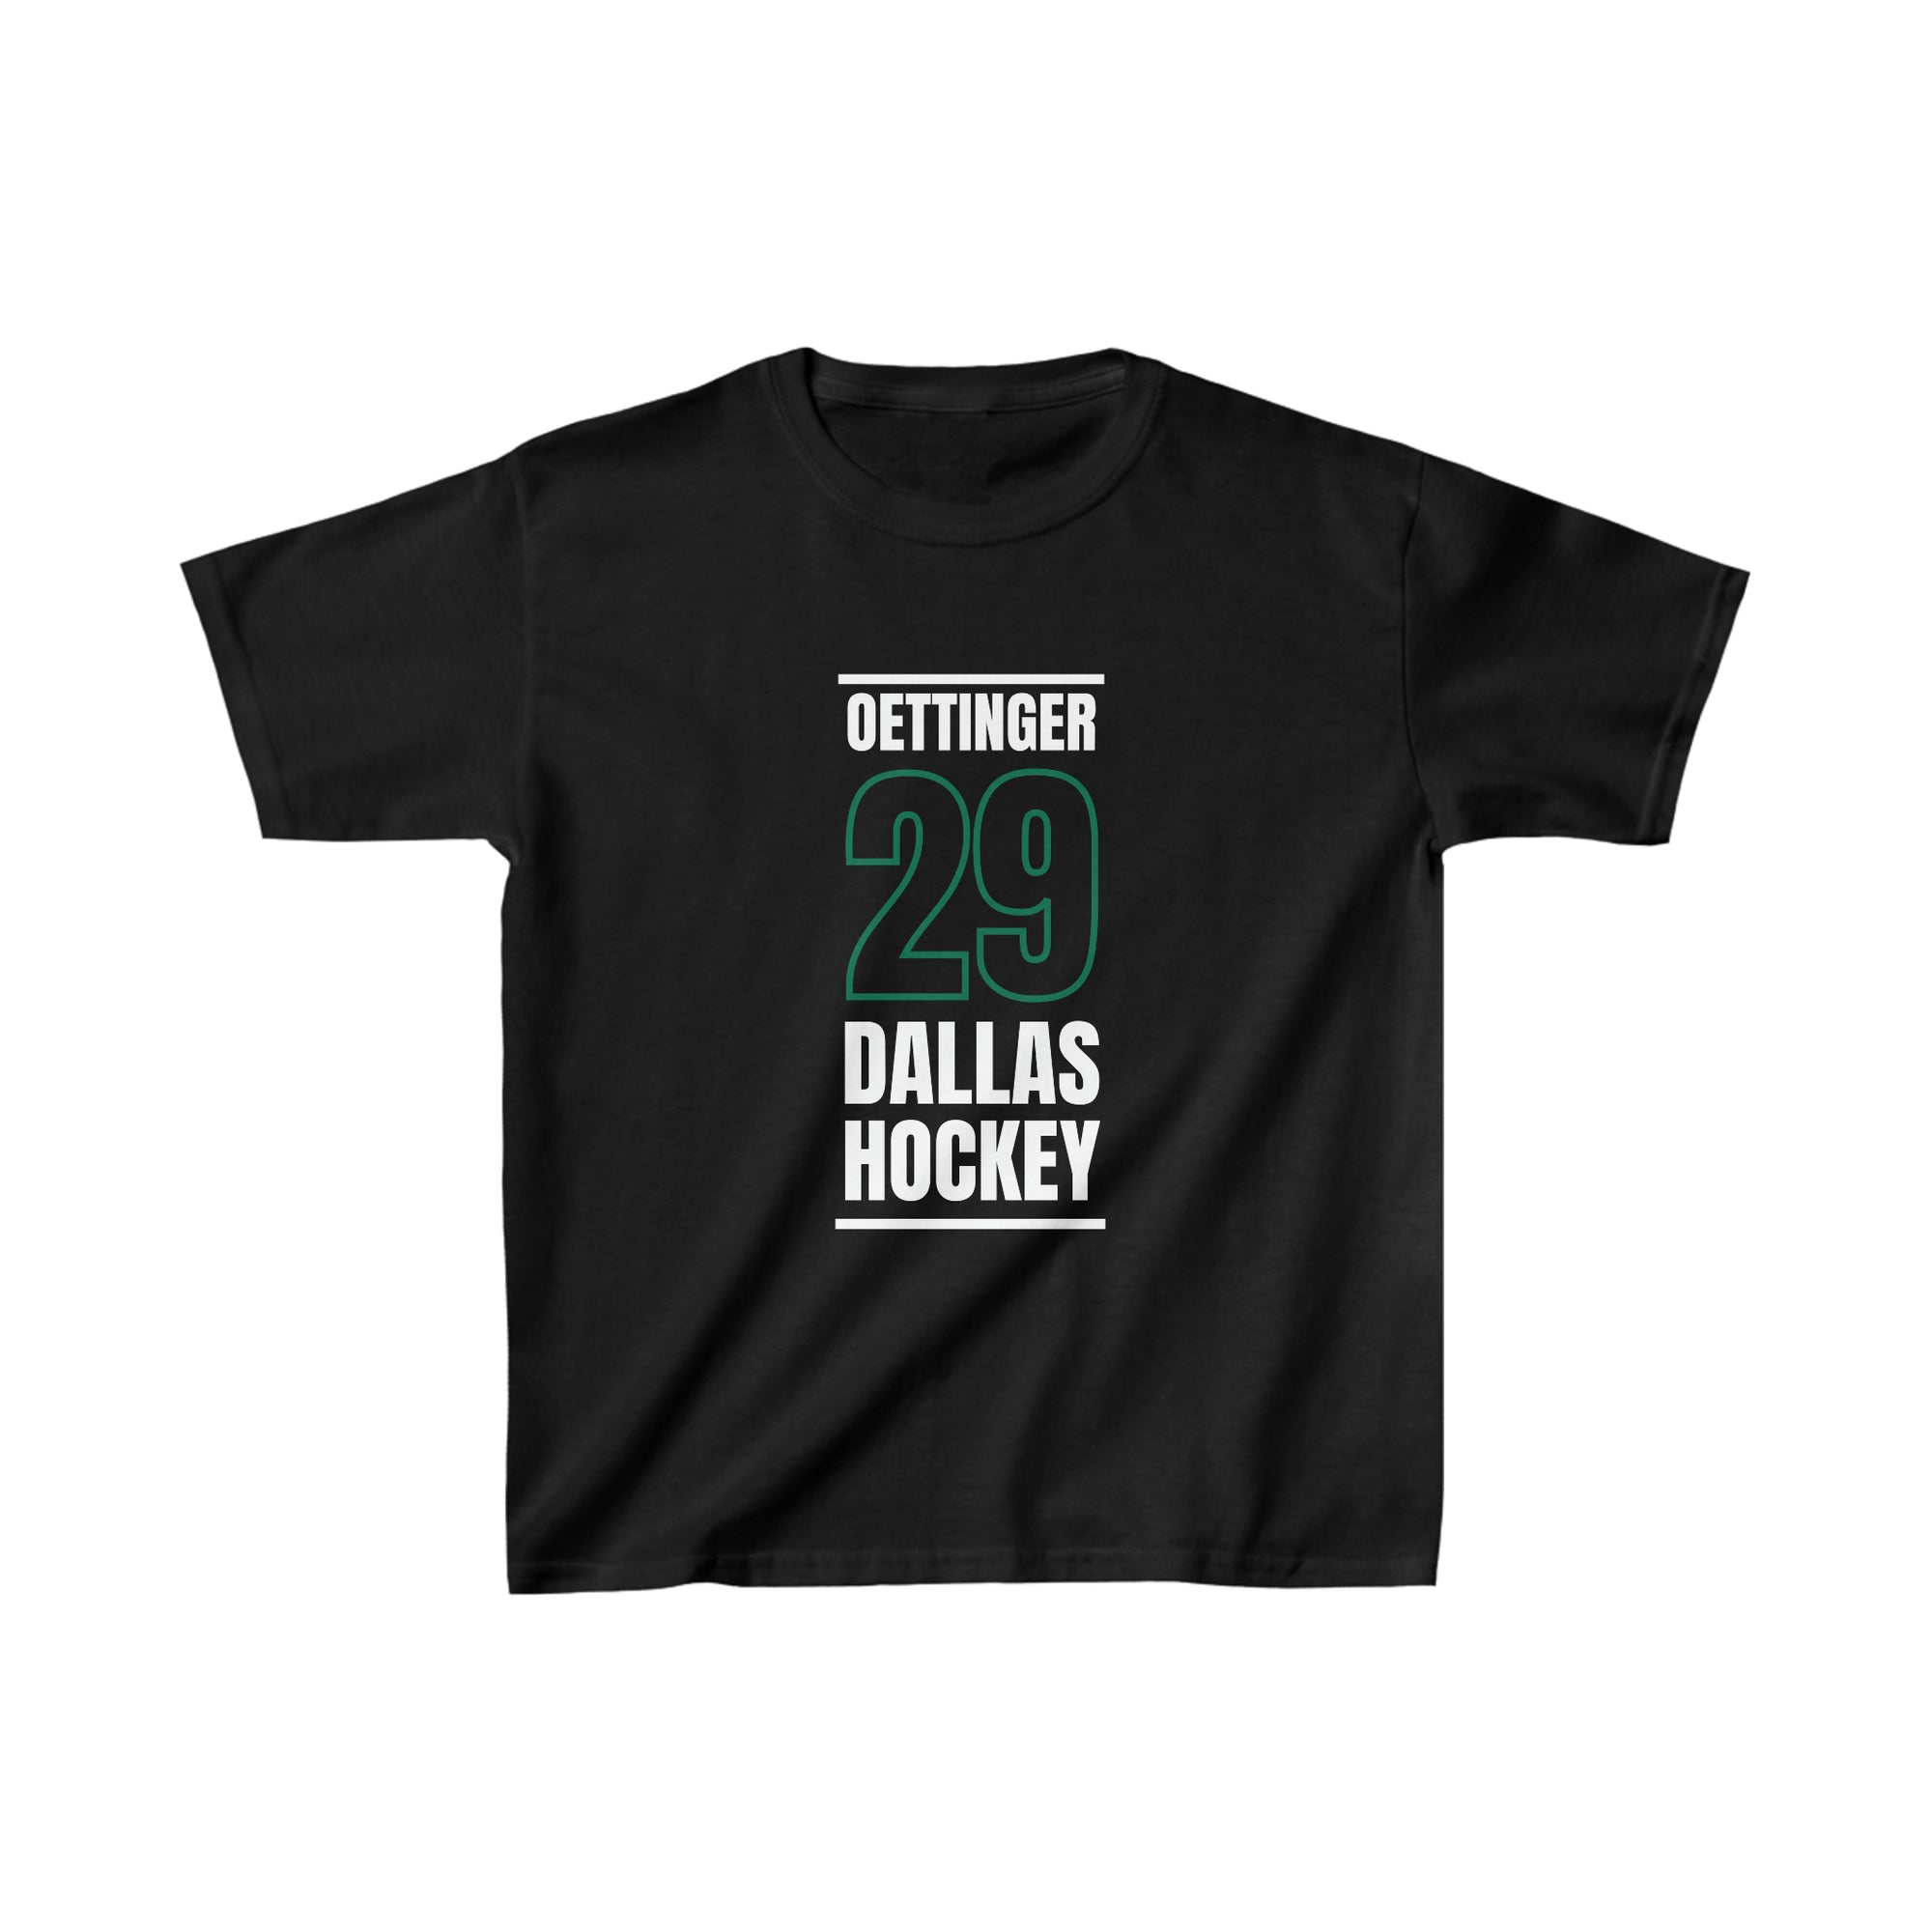 Oettinger 29 Dallas Hockey Black Vertical Design Kids Tee